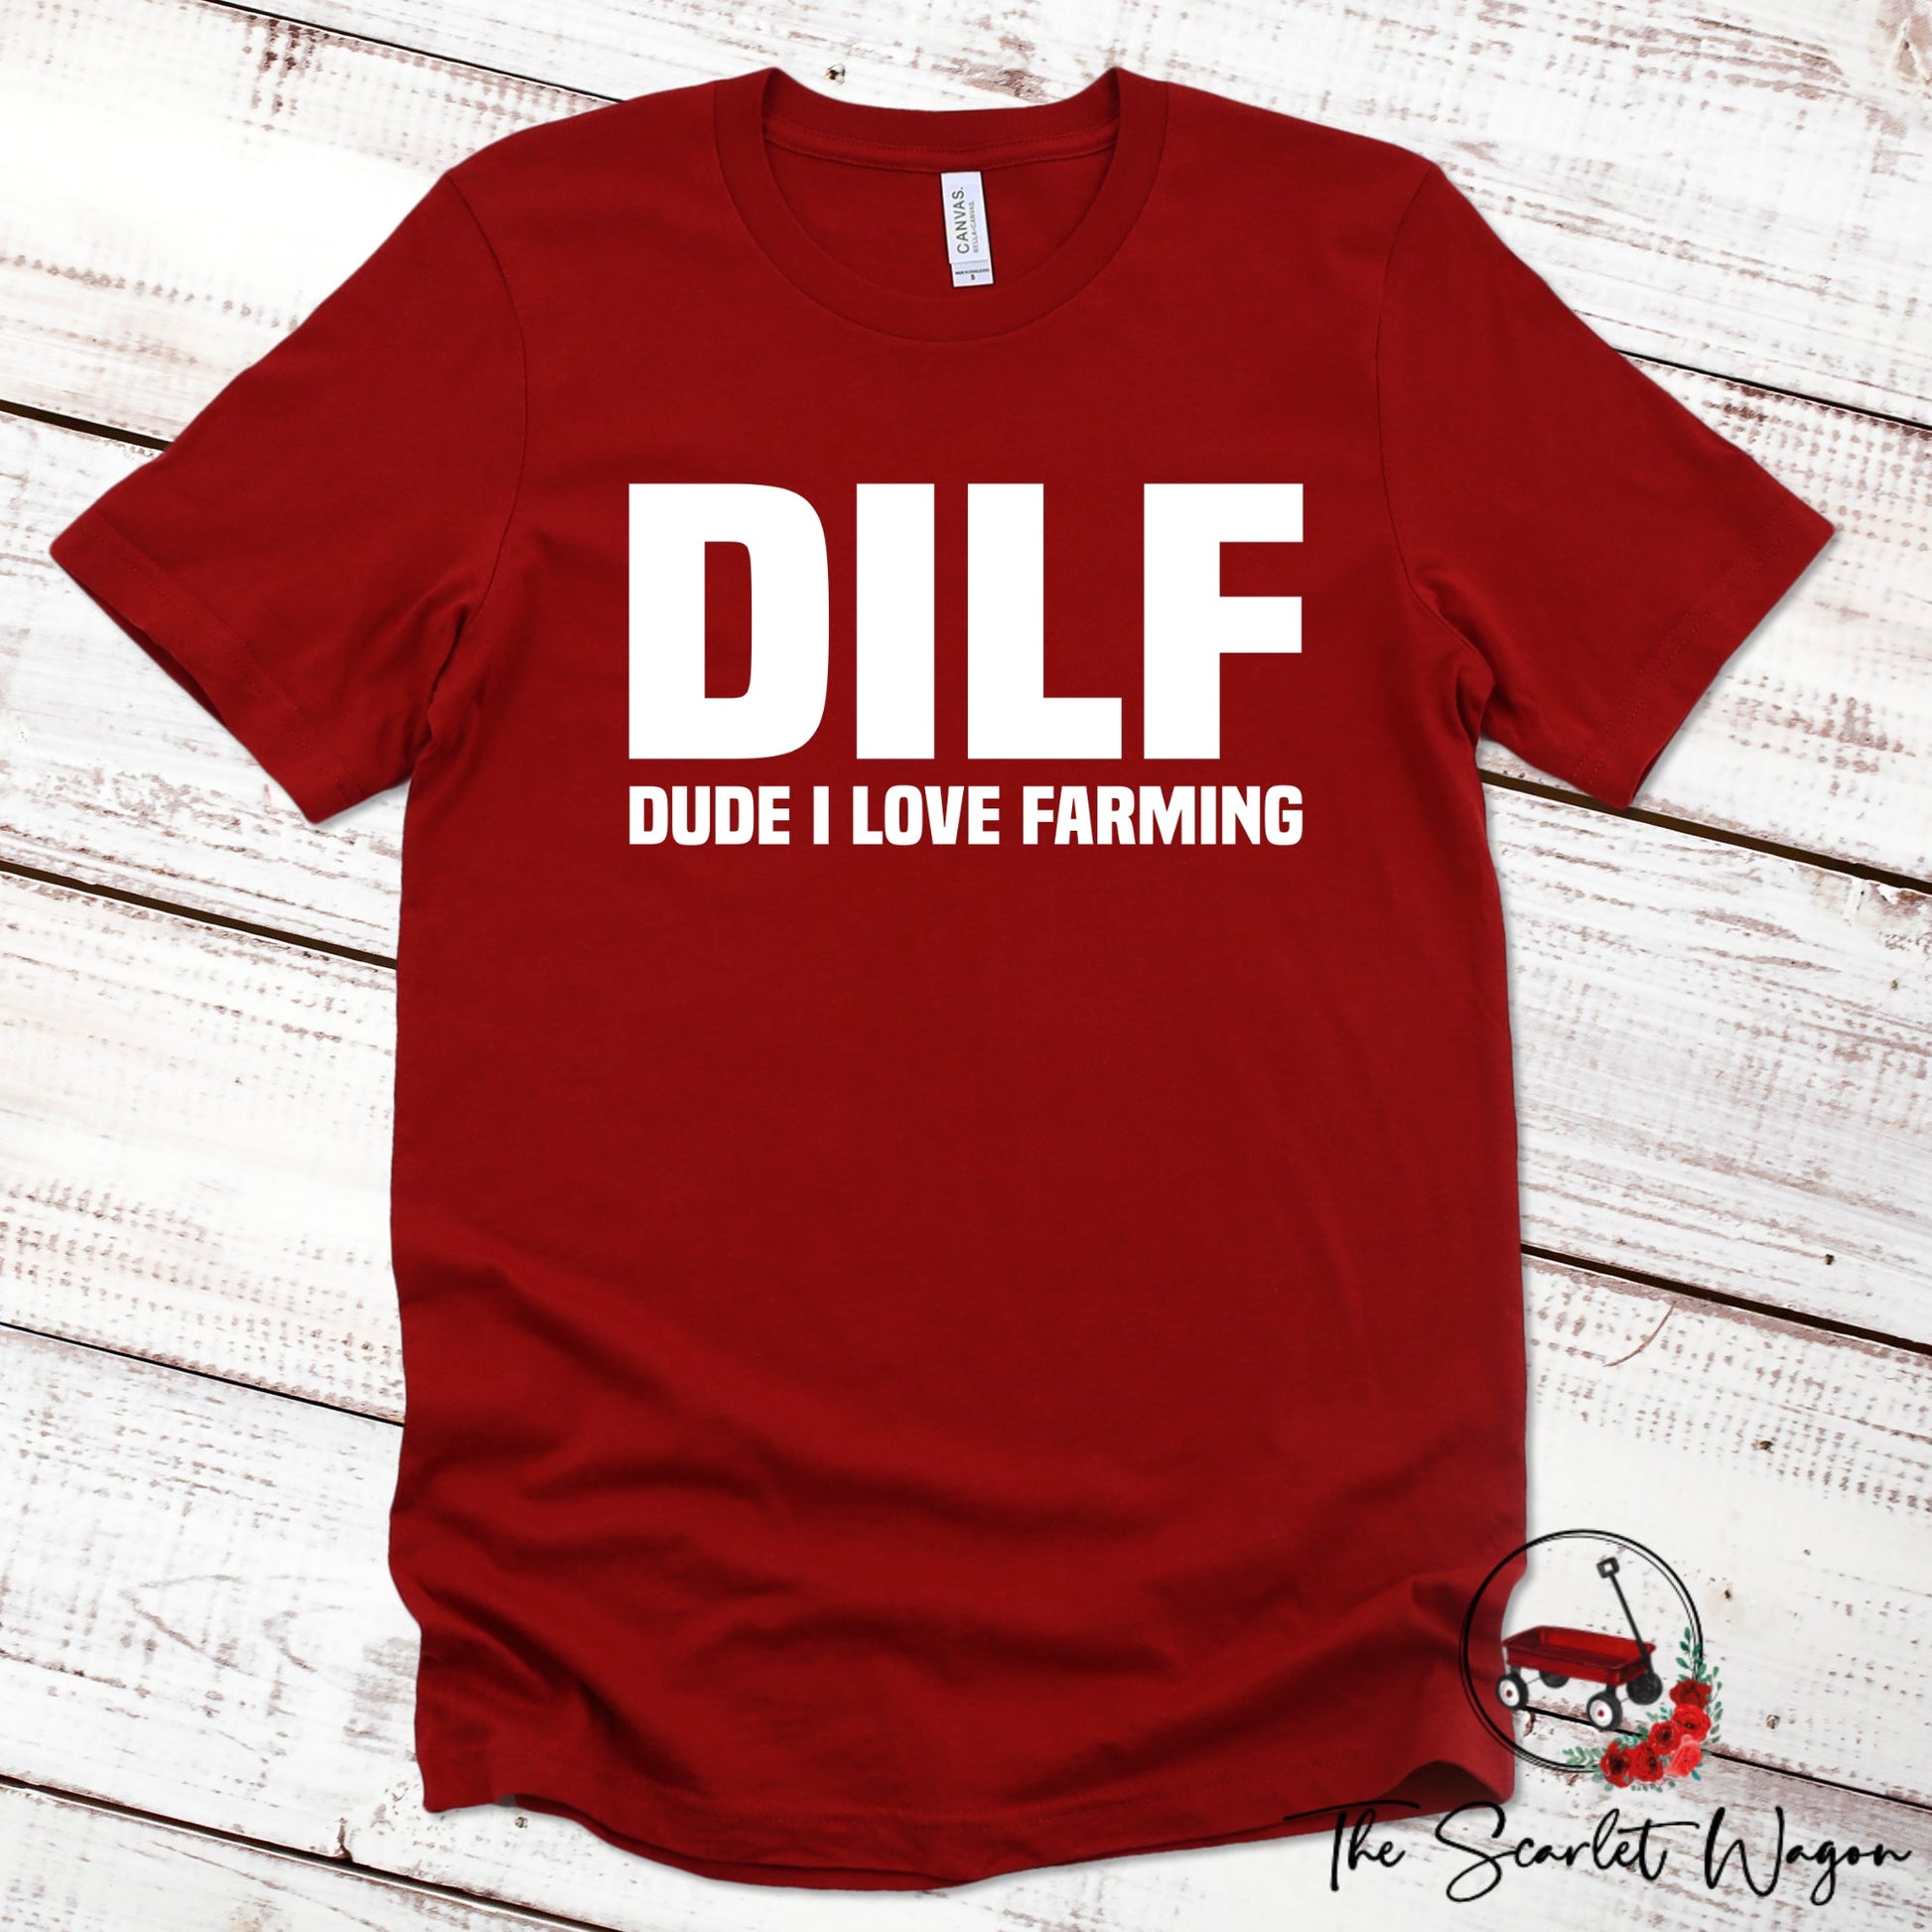 DILF - Dude I Love Farming Premium Tee Scarlet Wagon Red XS 